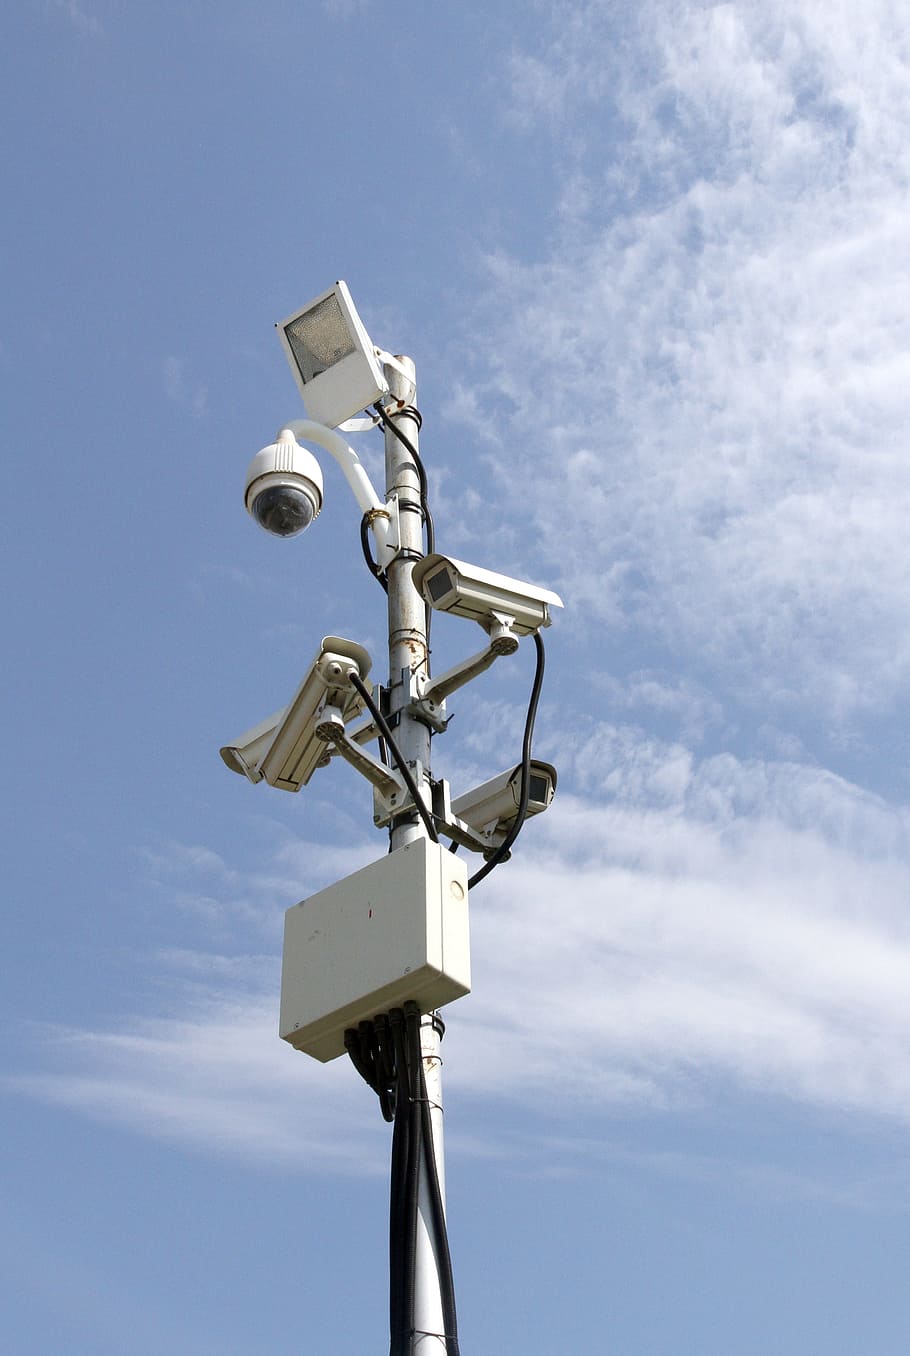 pos kamera keamanan, cahaya, cctv, pengawasan, keamanan, kamera, keselamatan, kontrol, sistem, teknologi